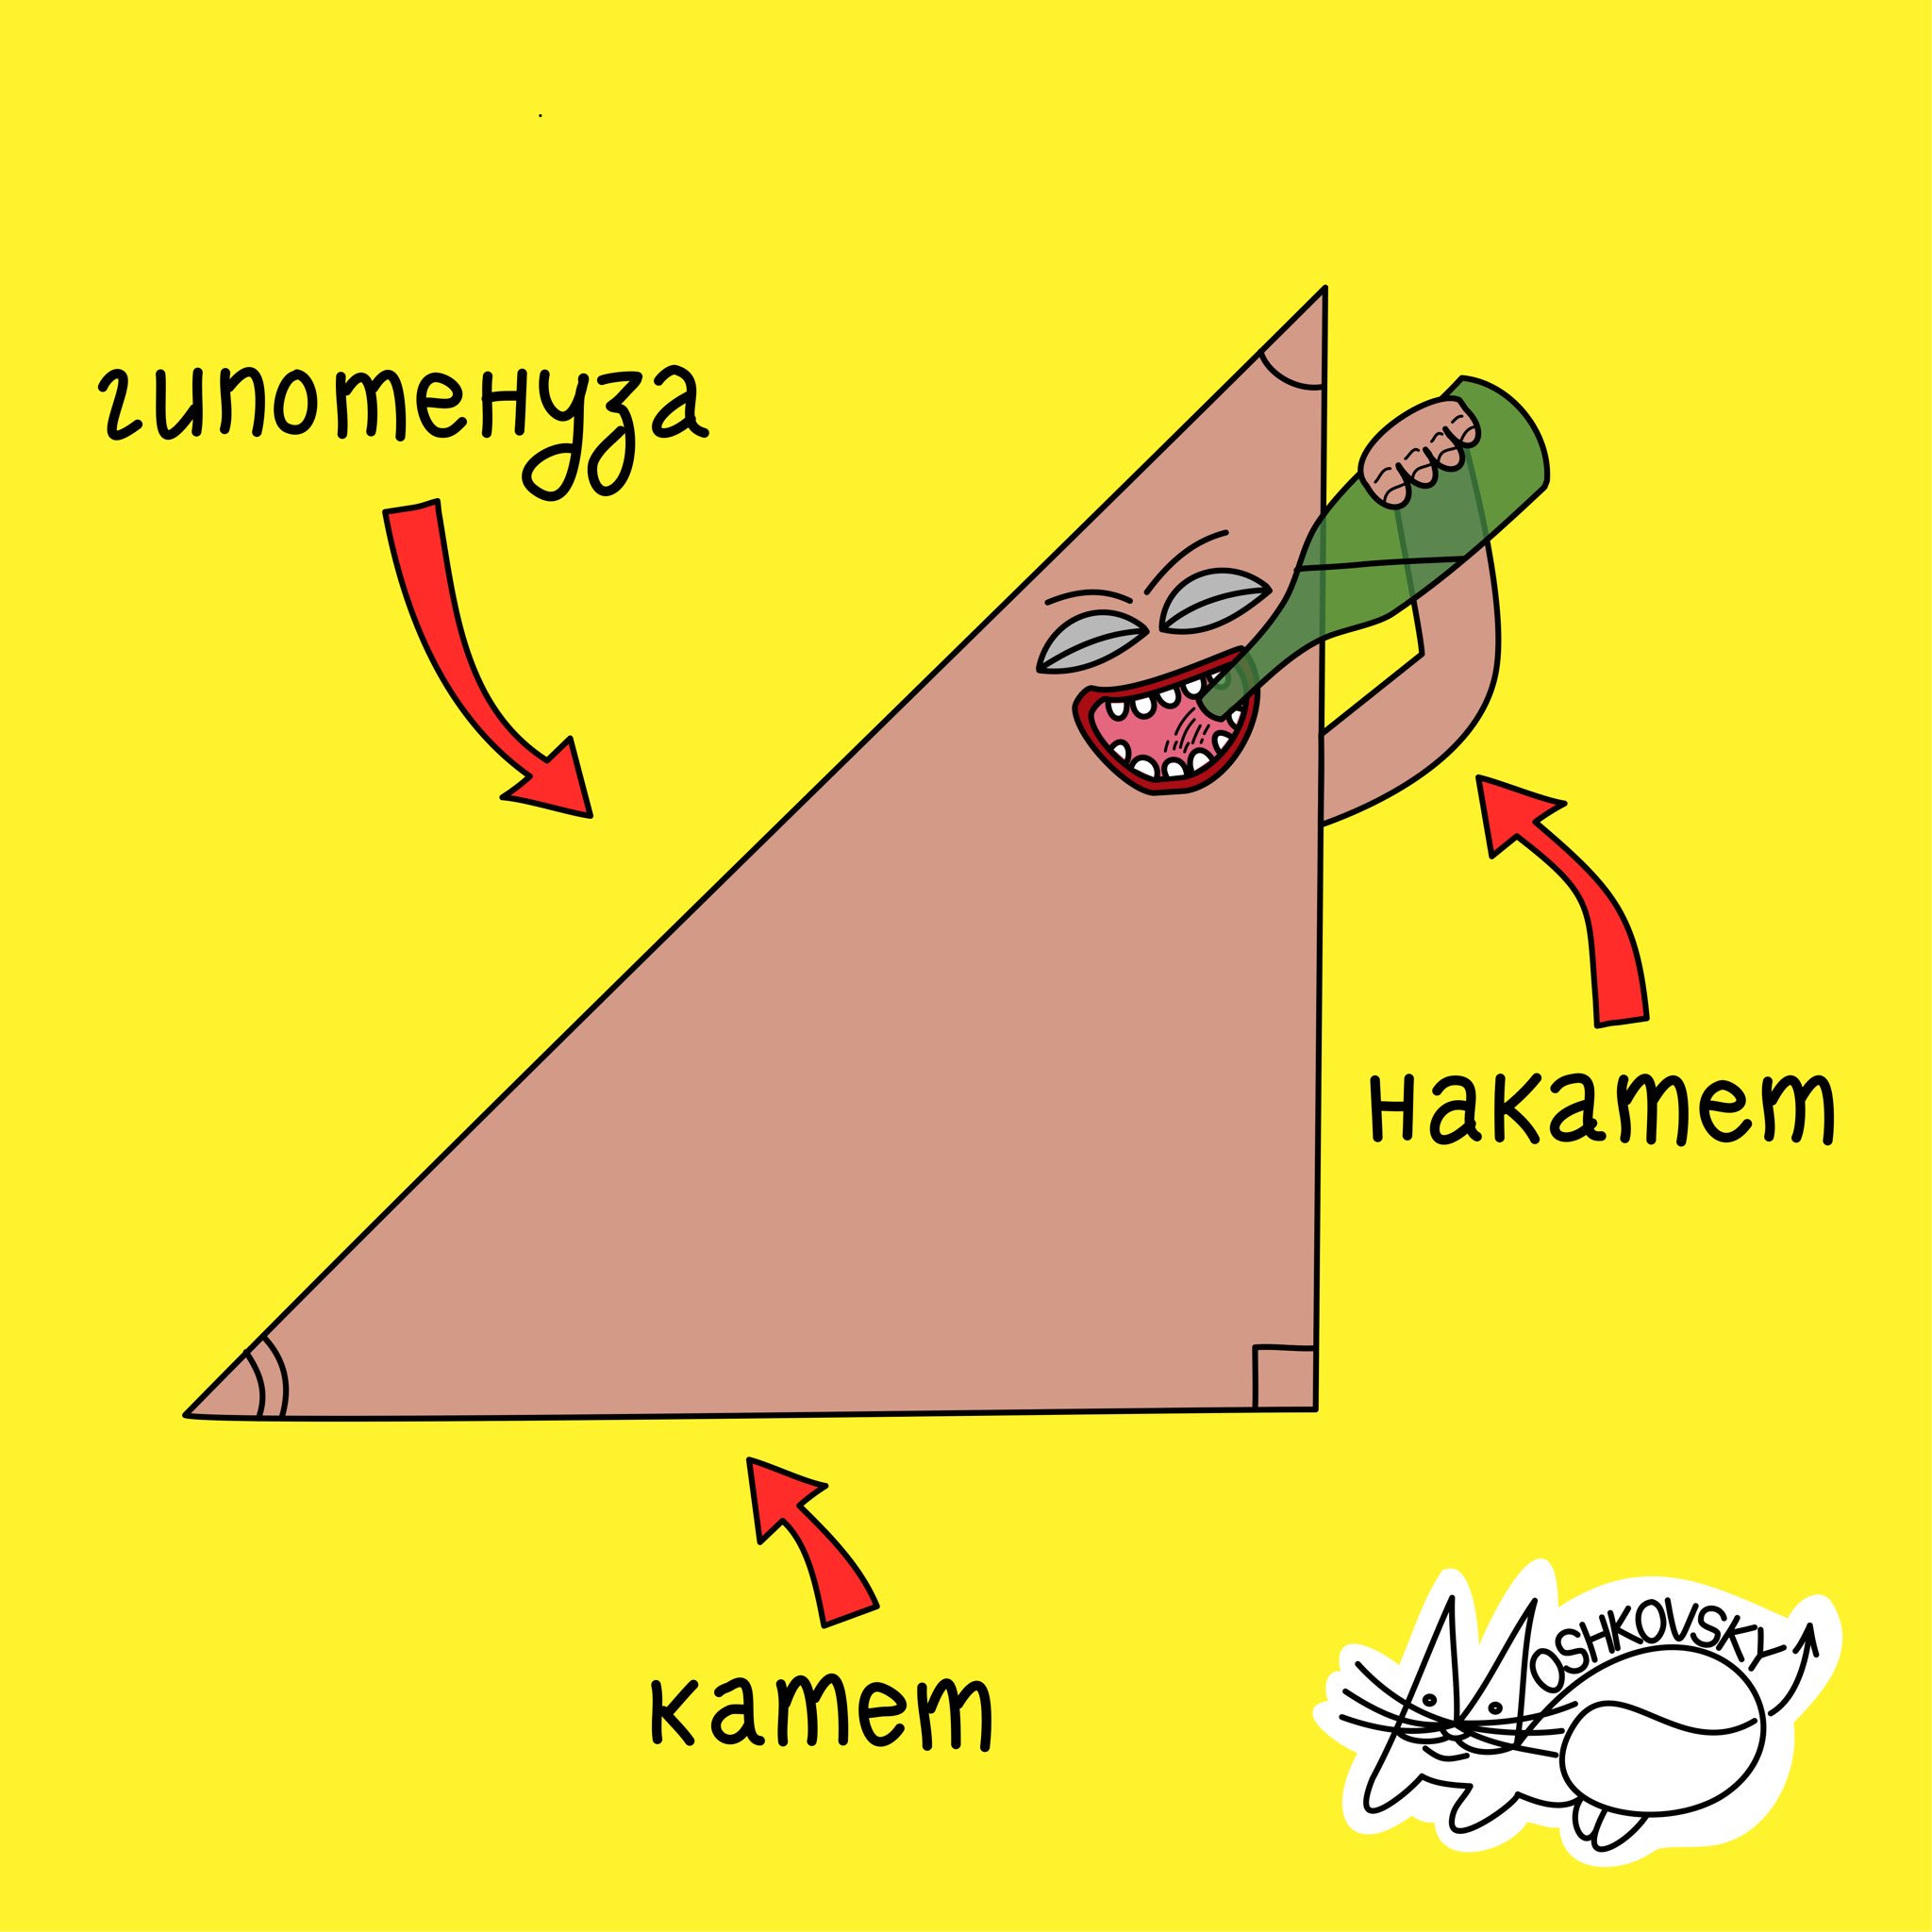 Moshkovsky_art on X: Ловите немножко геометрии) геометрия треугольник  накатет гипотенуза нг арт ржака прикол юмор смех смешно комикс  мемы moshkovsky t.coLYu5OX7pSR  X